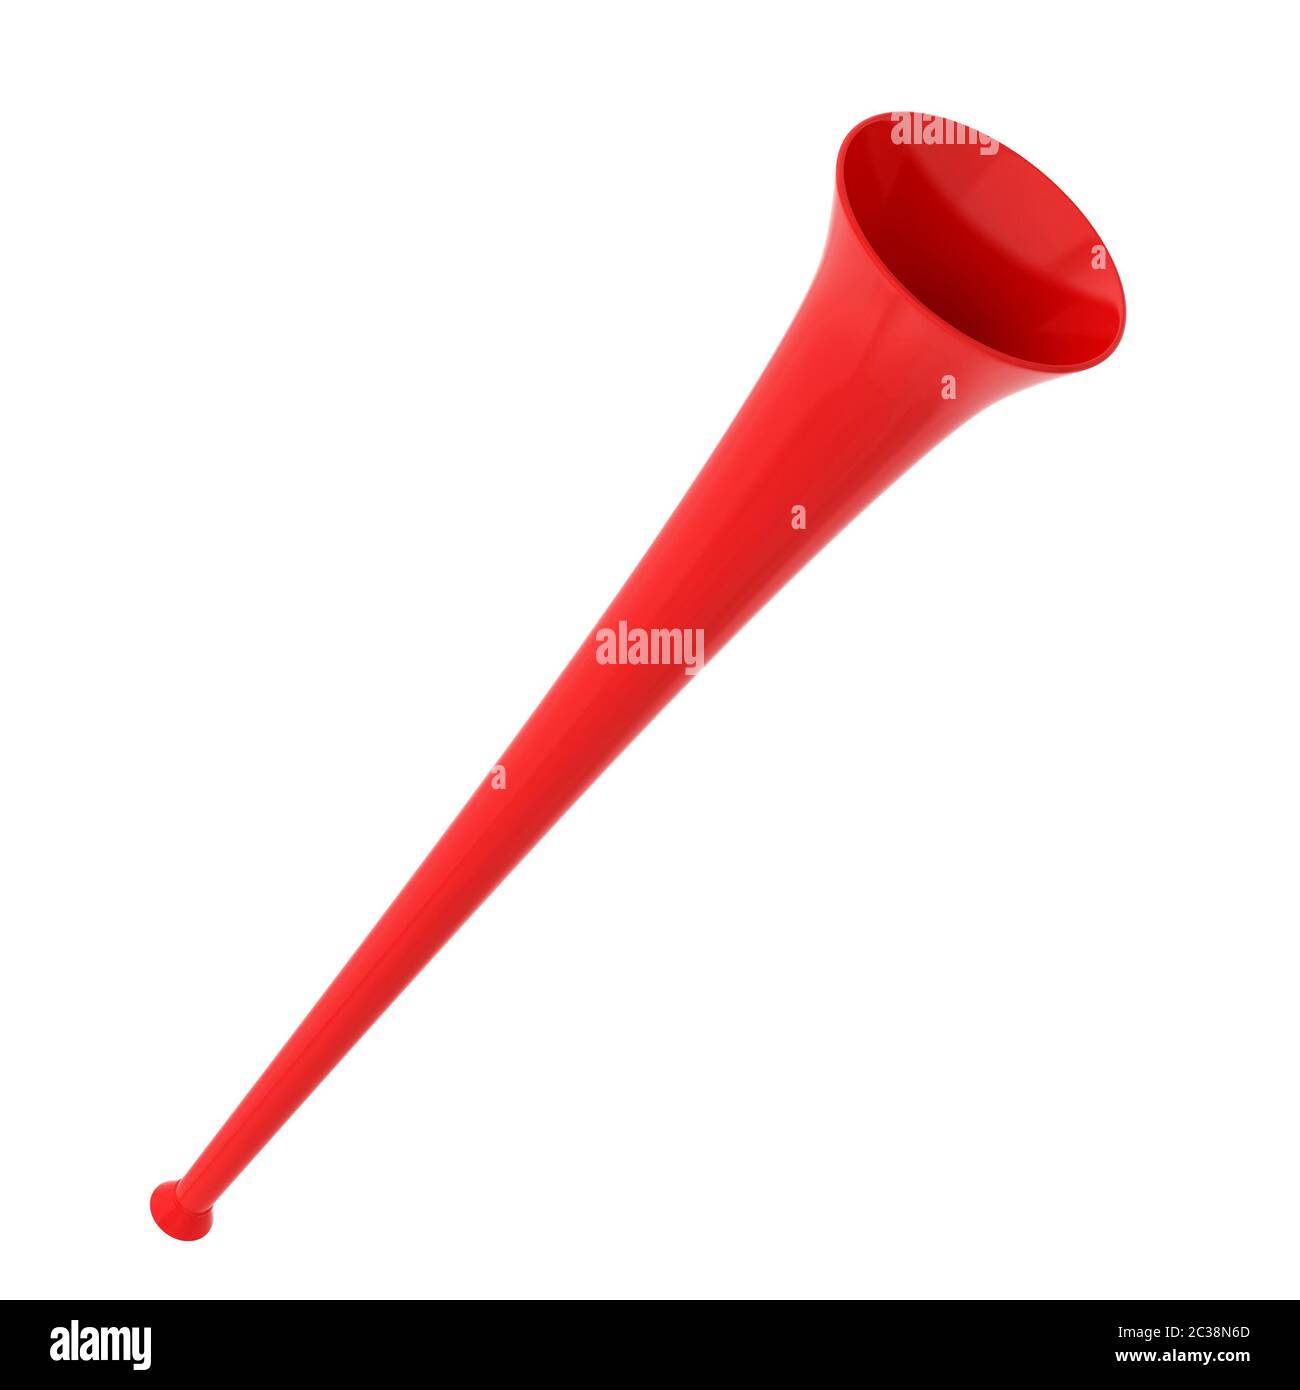 Fan vuvuzela trumpet. 3d illustration isolated on white background Stock Photo